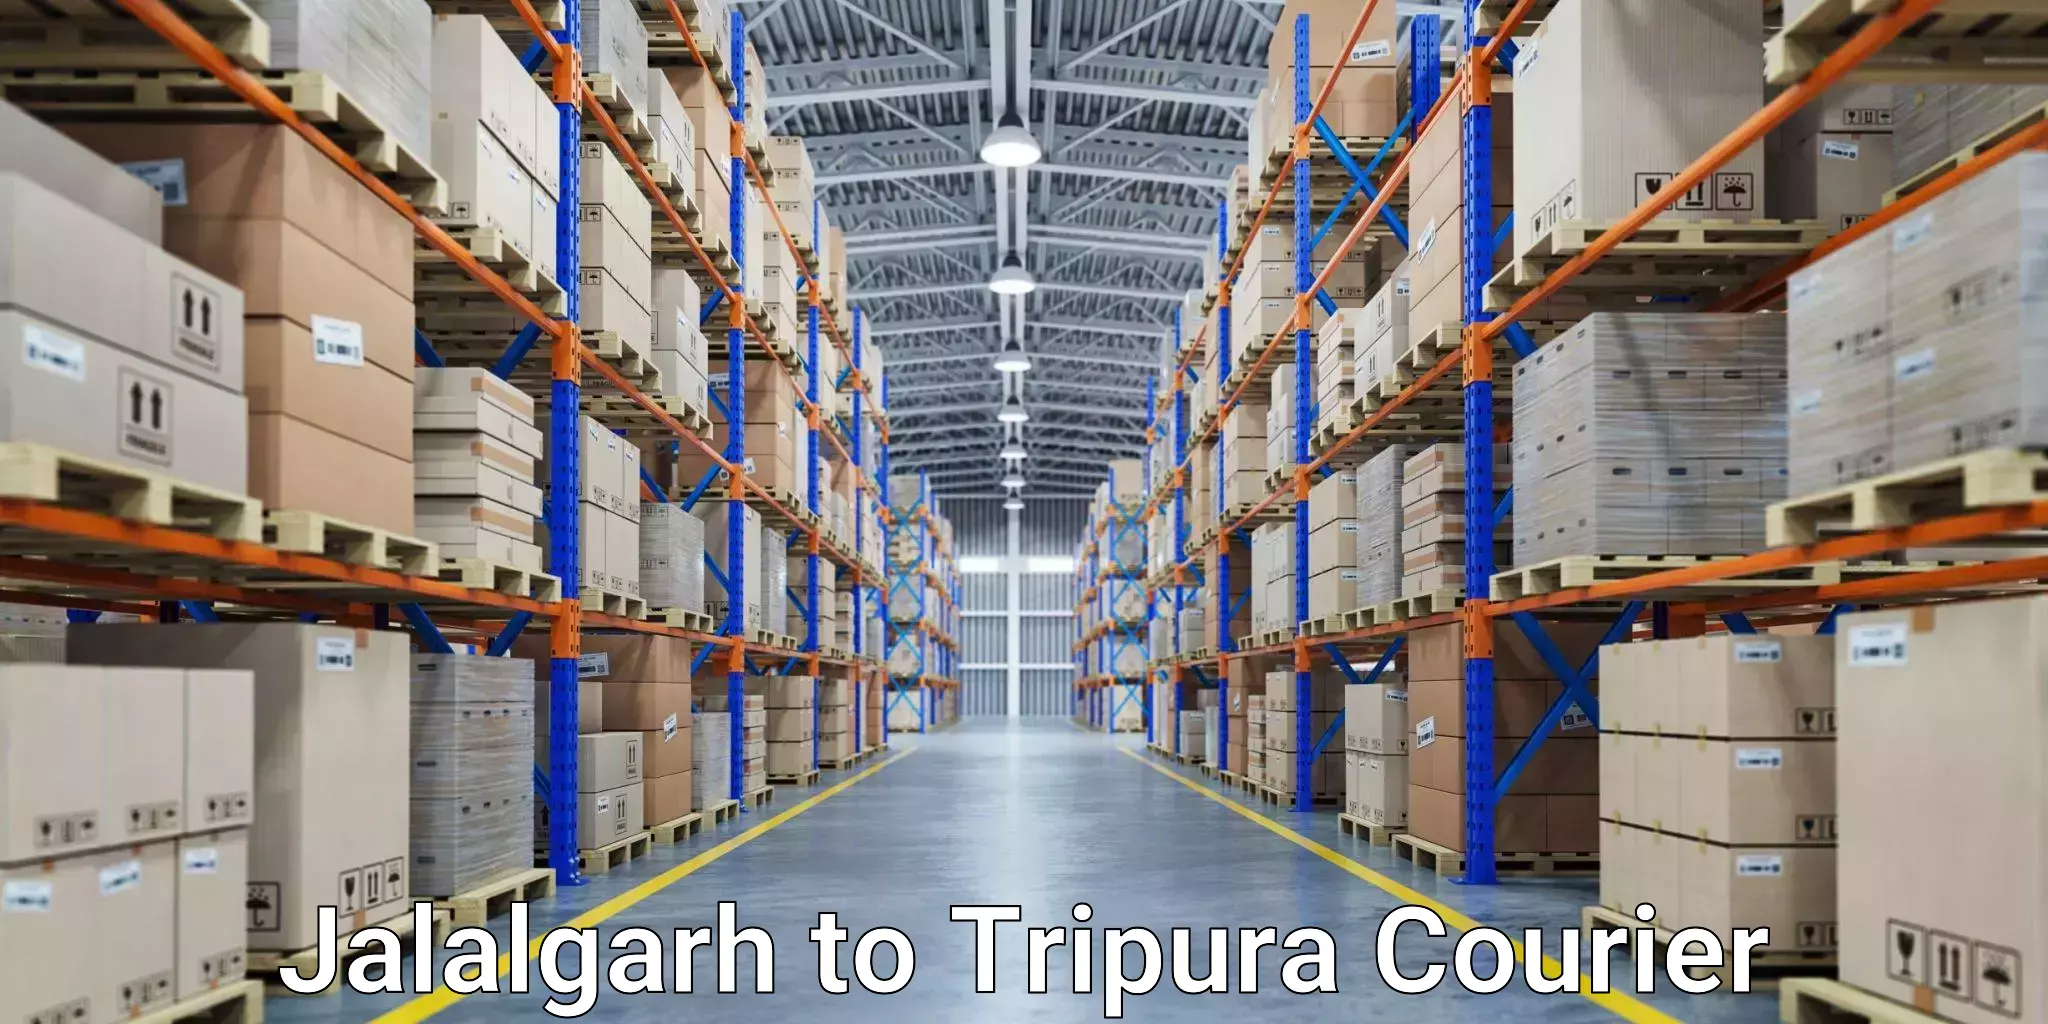 Reliable package handling Jalalgarh to Udaipur Tripura